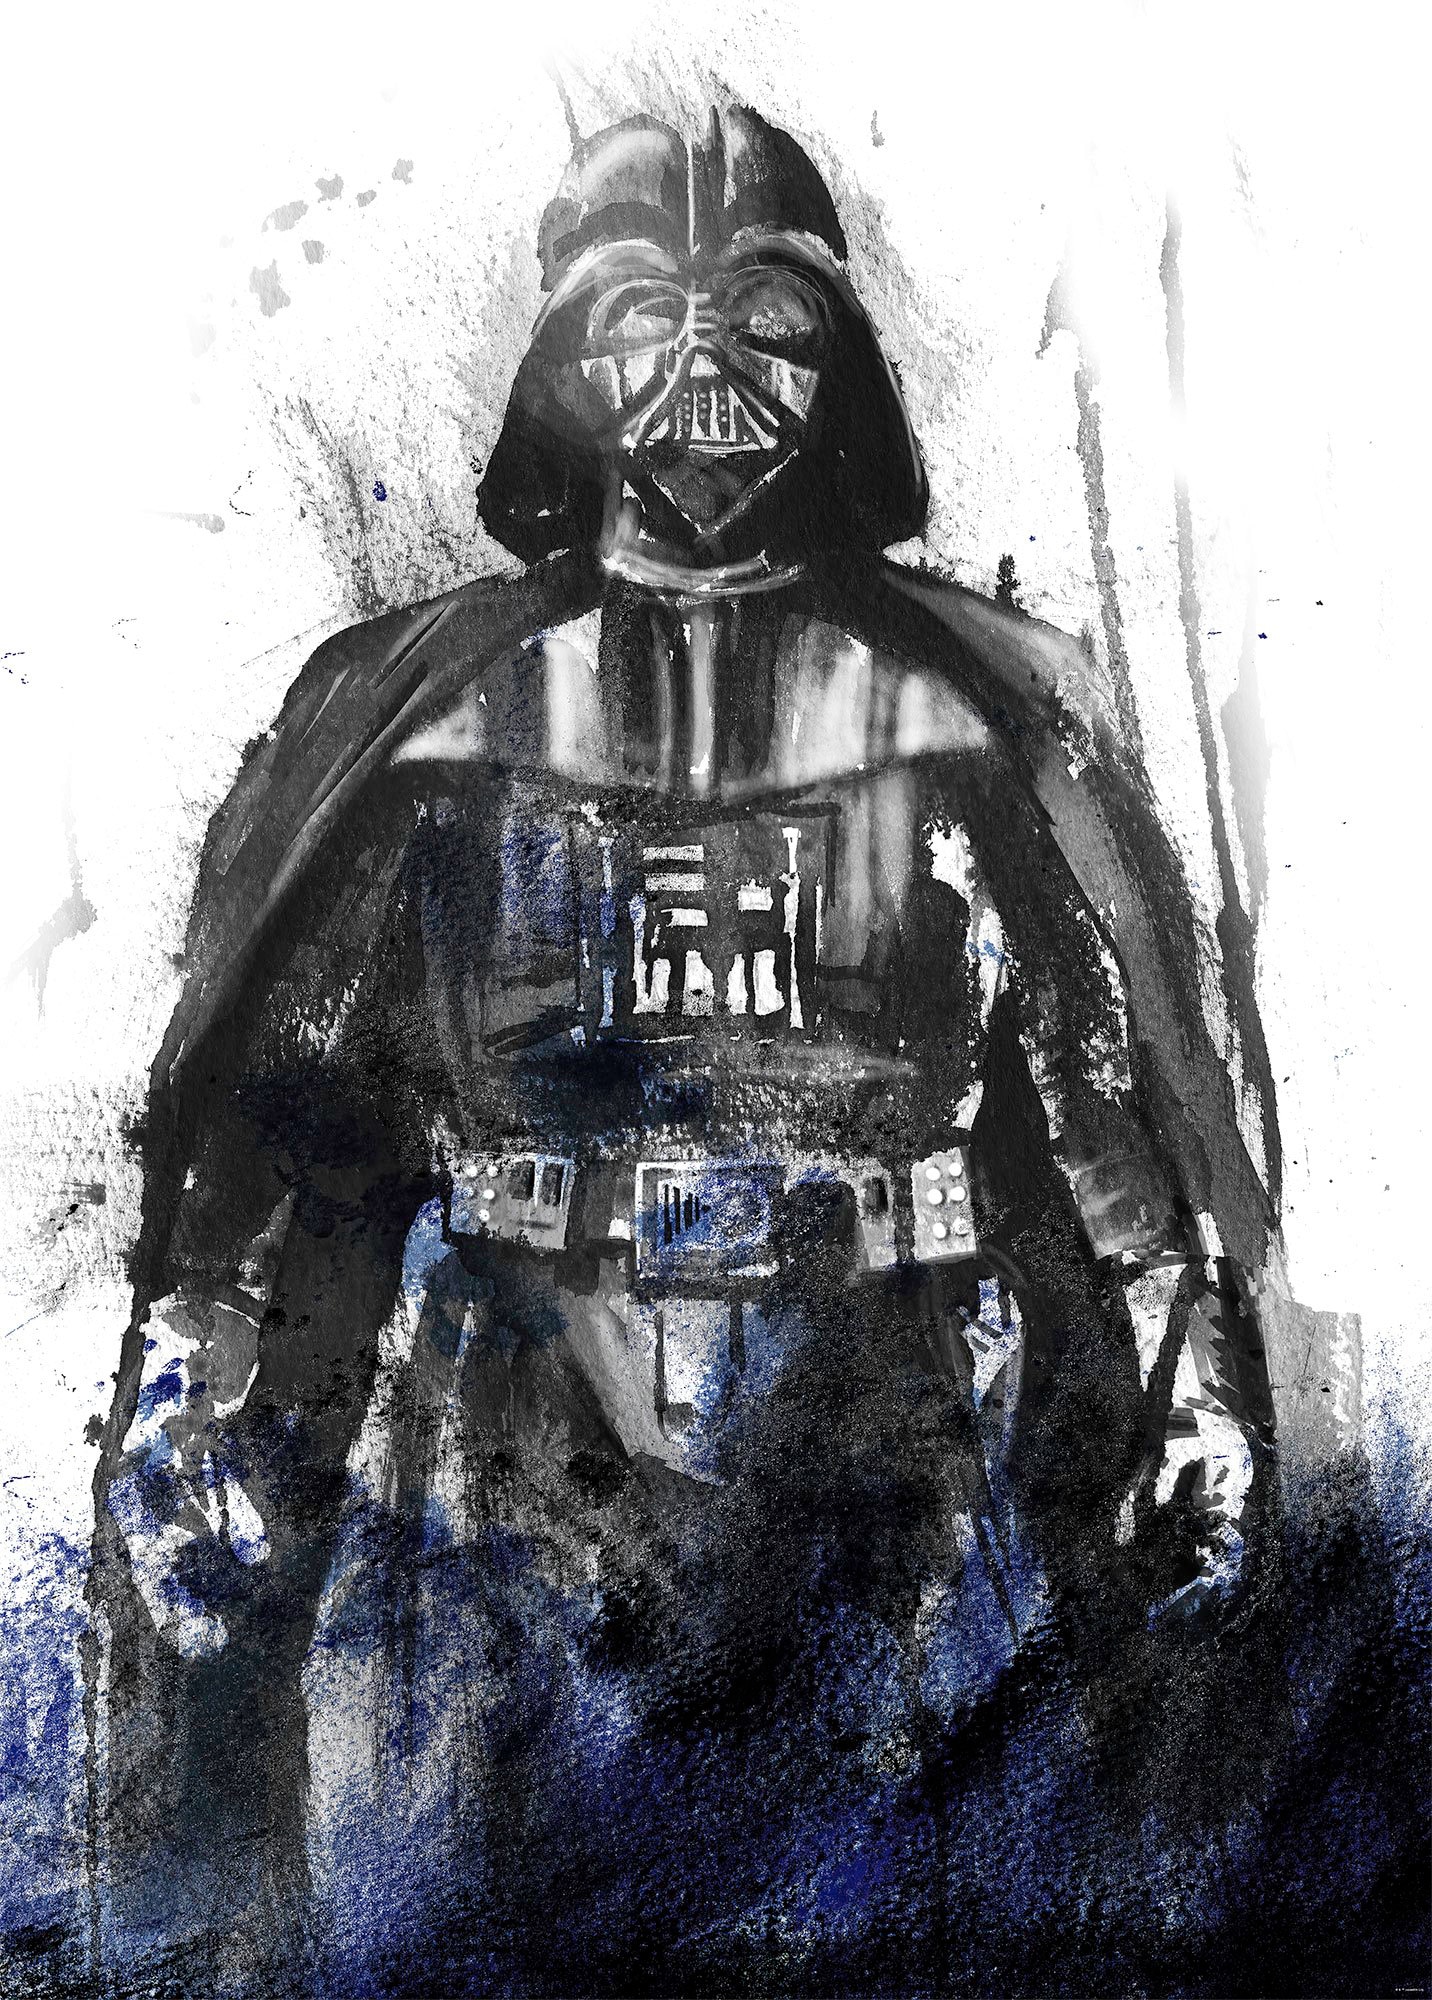 Komar Vliestapete "Star Wars Watercolor Vader" von Komar